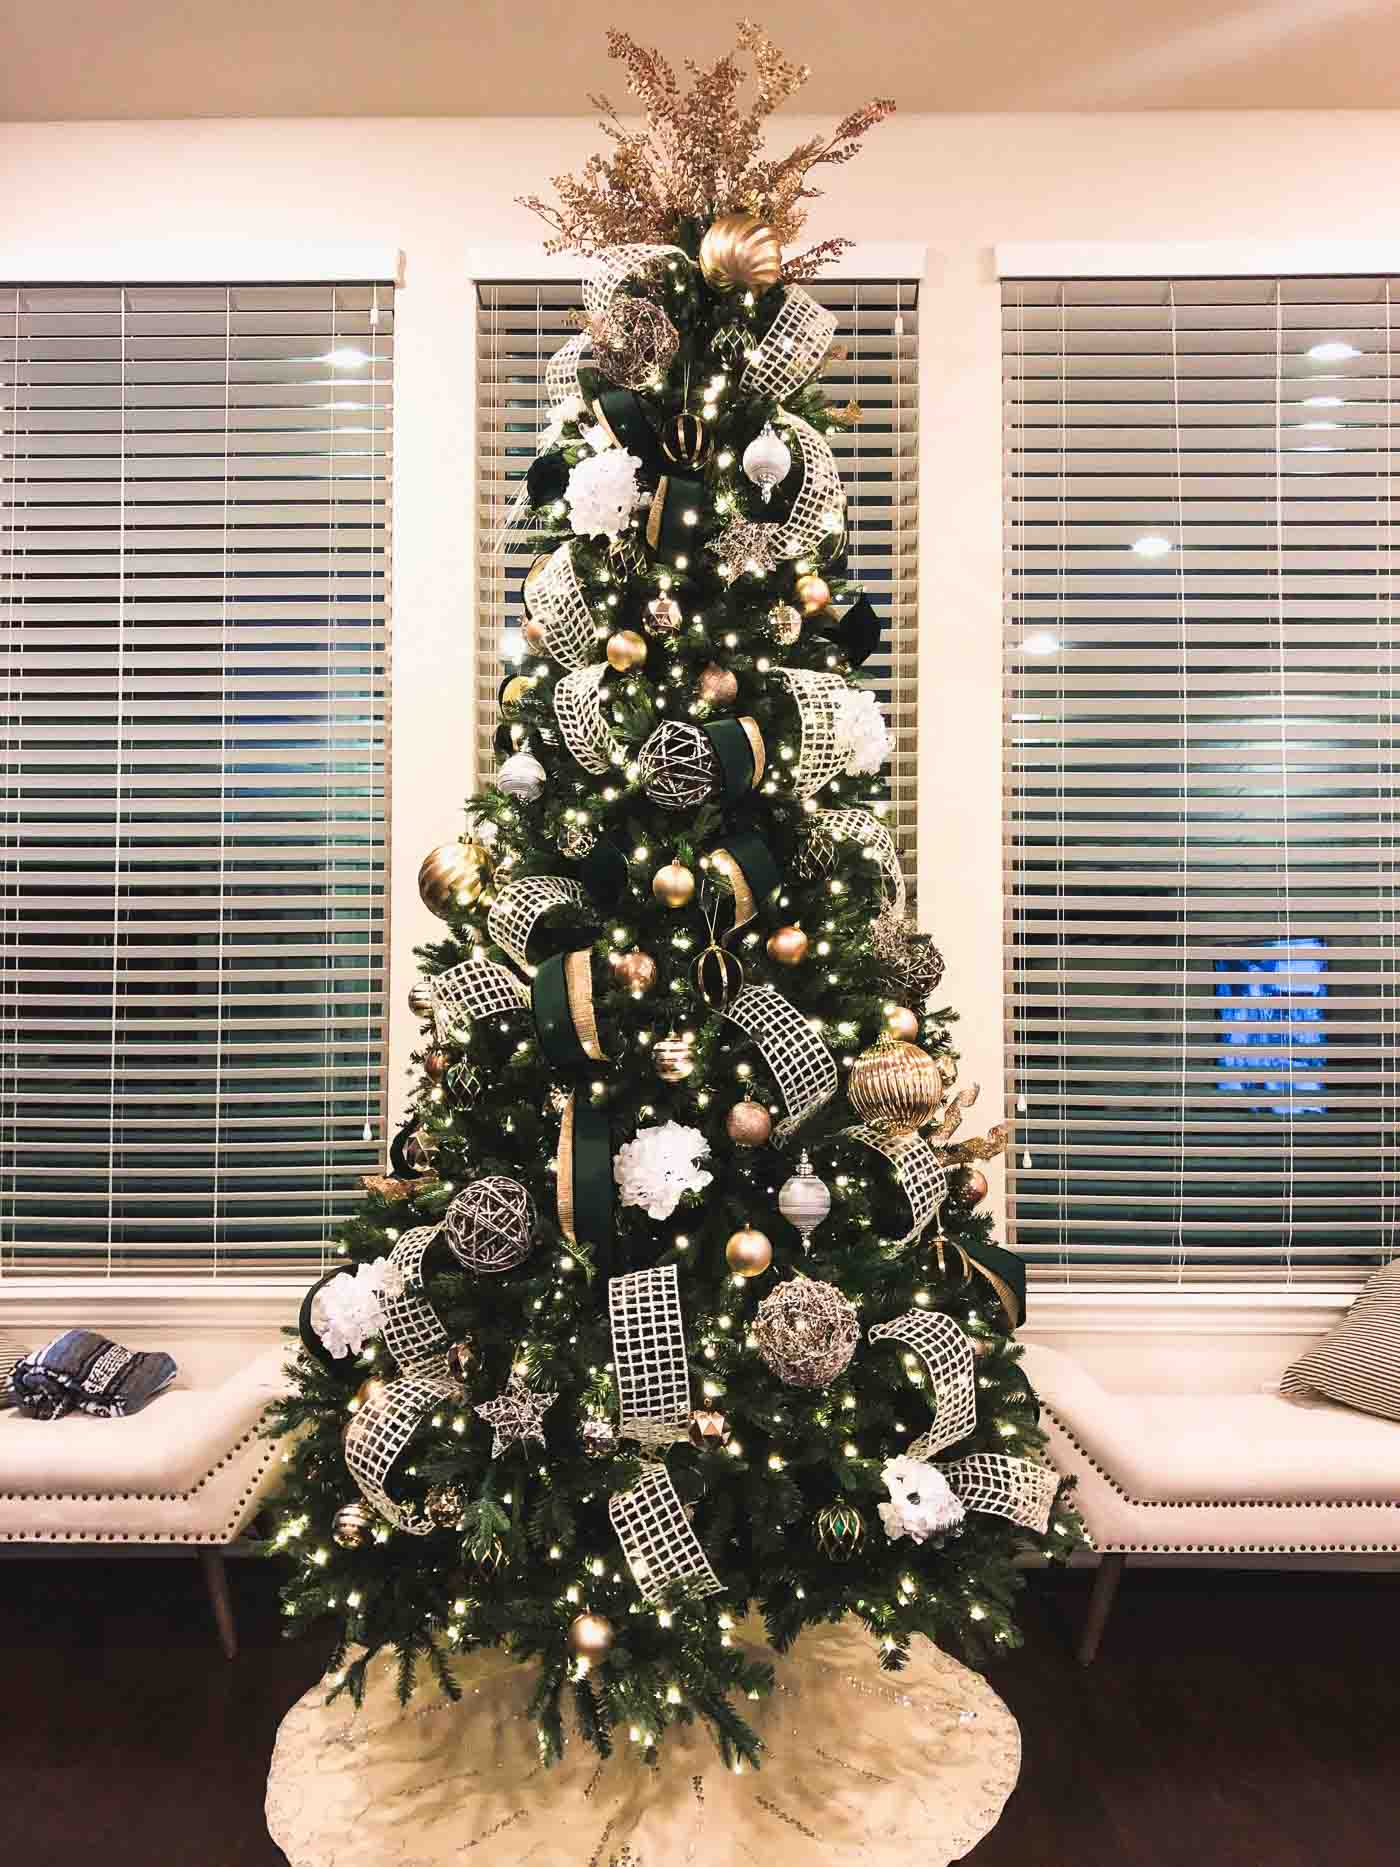 50 Reader Christmas Tree Beauties You've Gotta See!